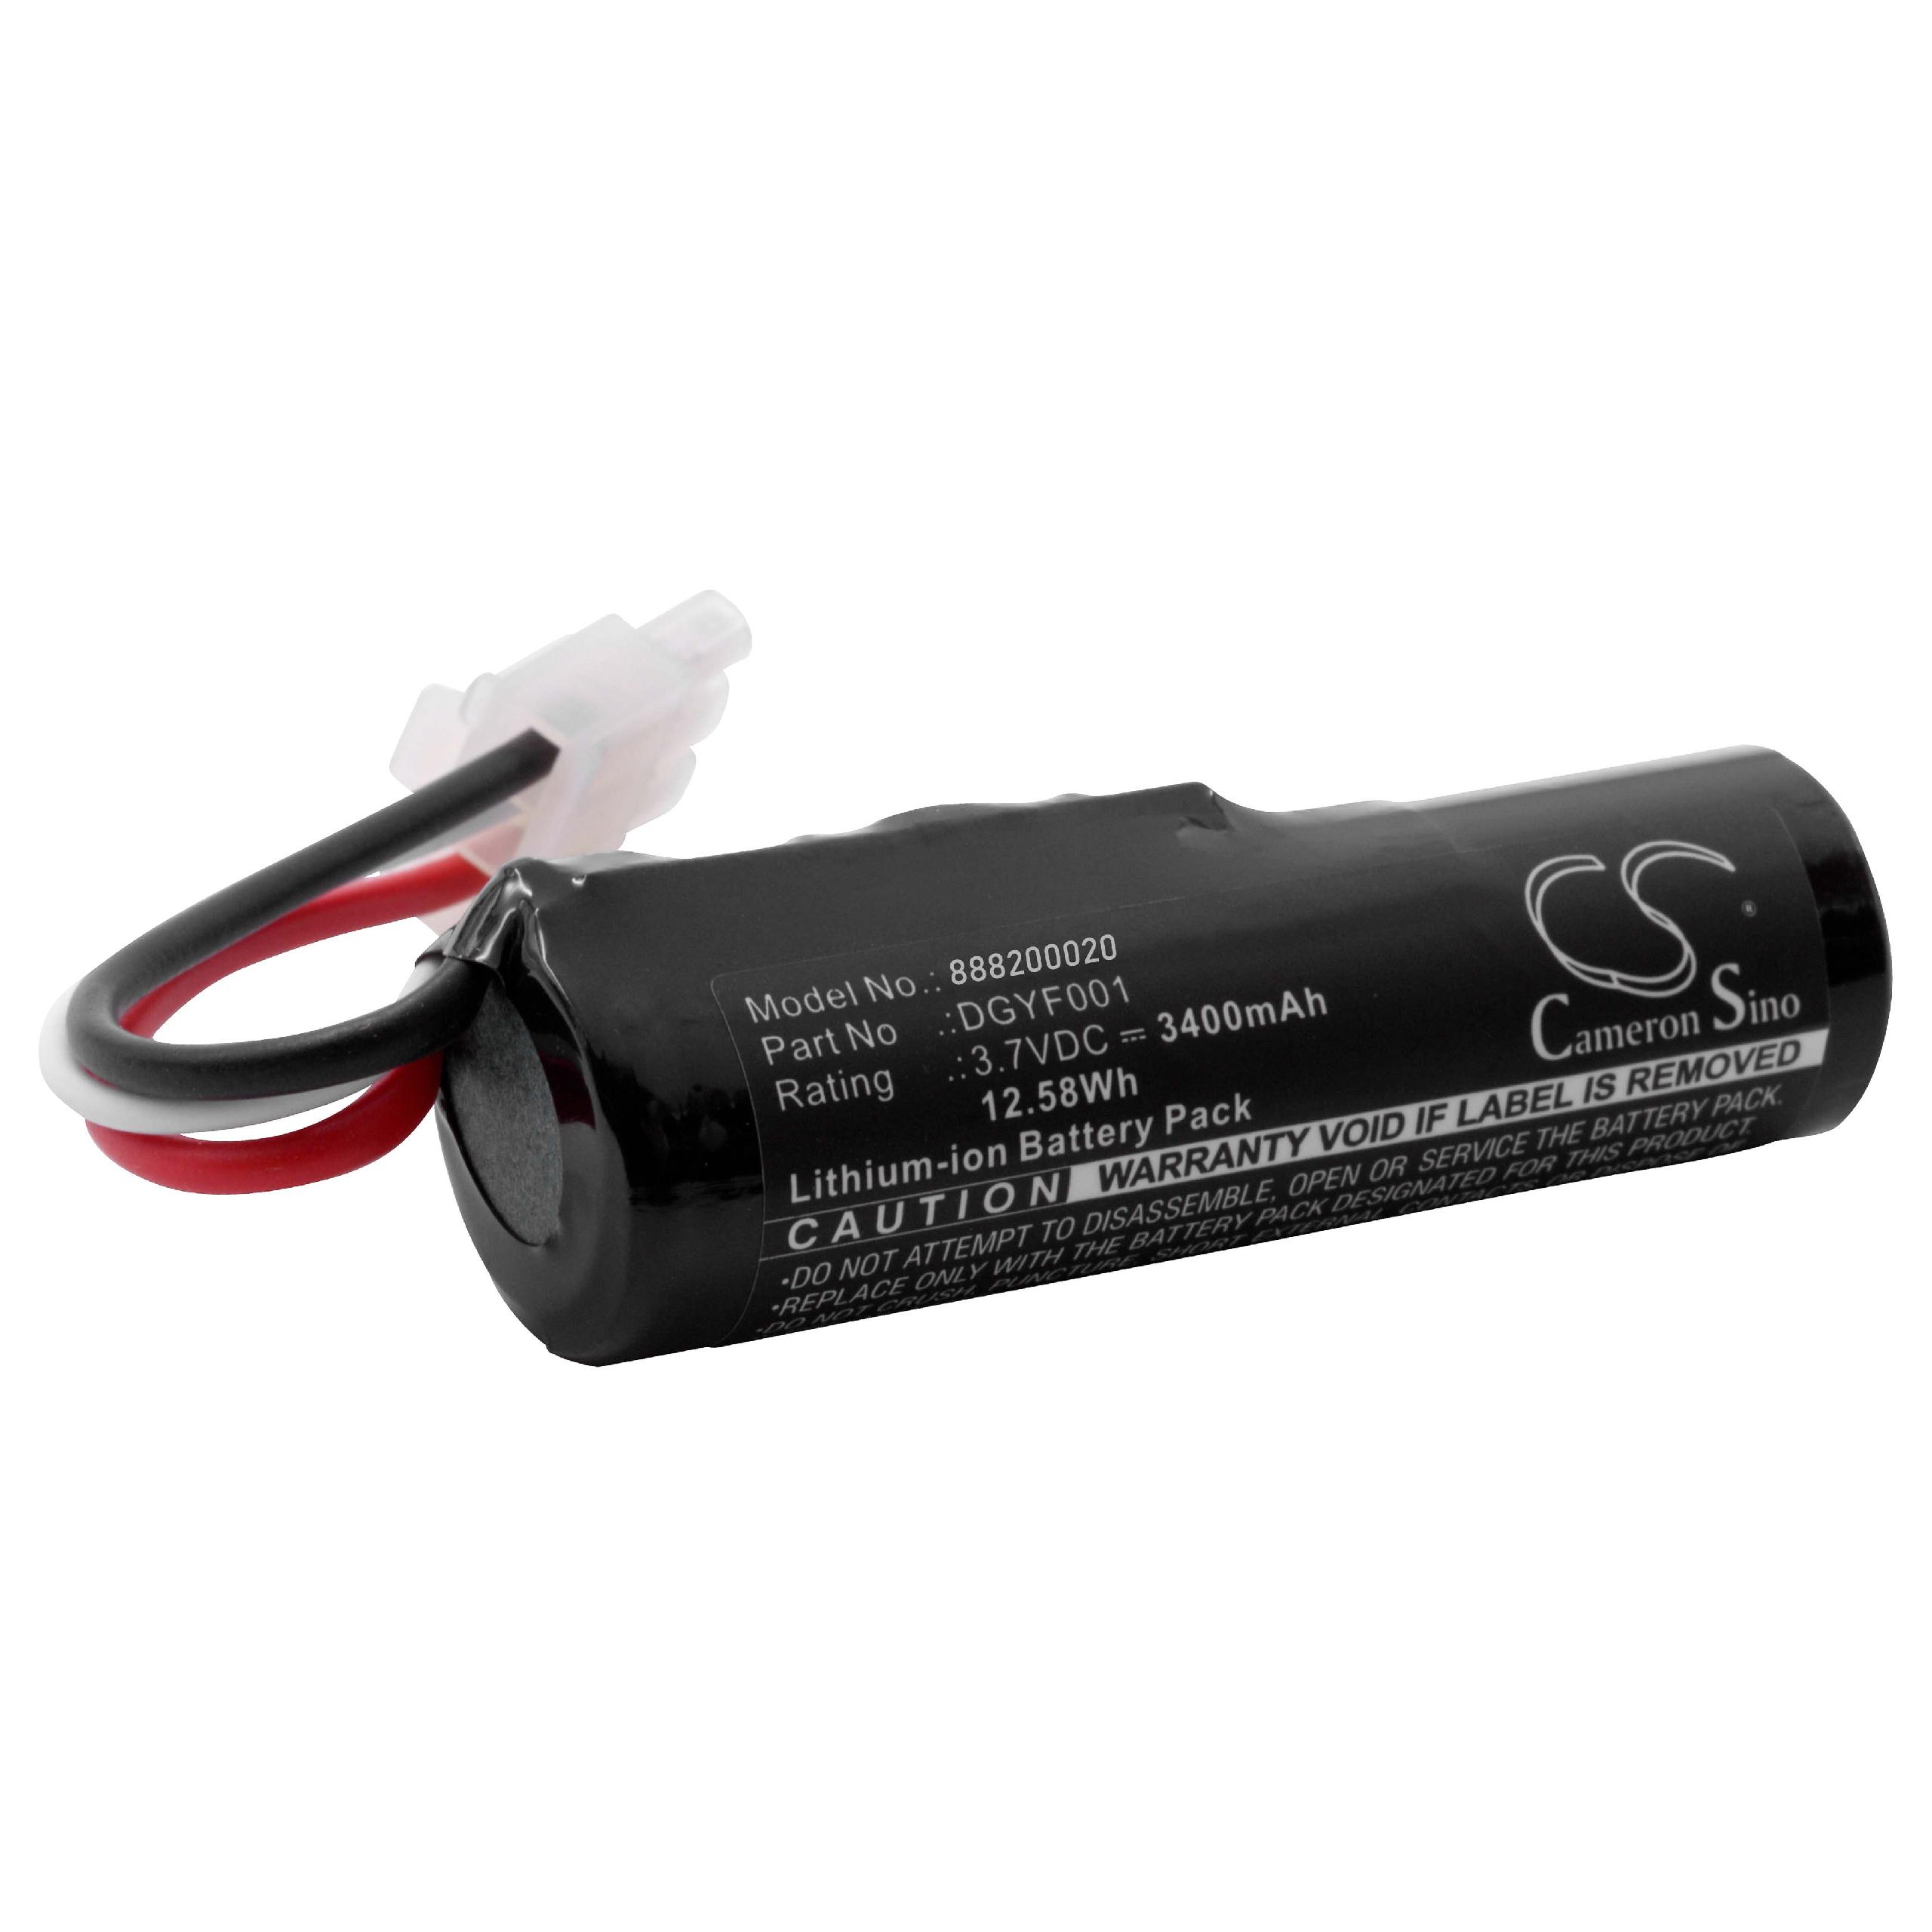 Batteria sostituisce Logitech DGYF001, 533-000096 per altoparlanti Logitech - 3400mAh 3,7V Li-Ion